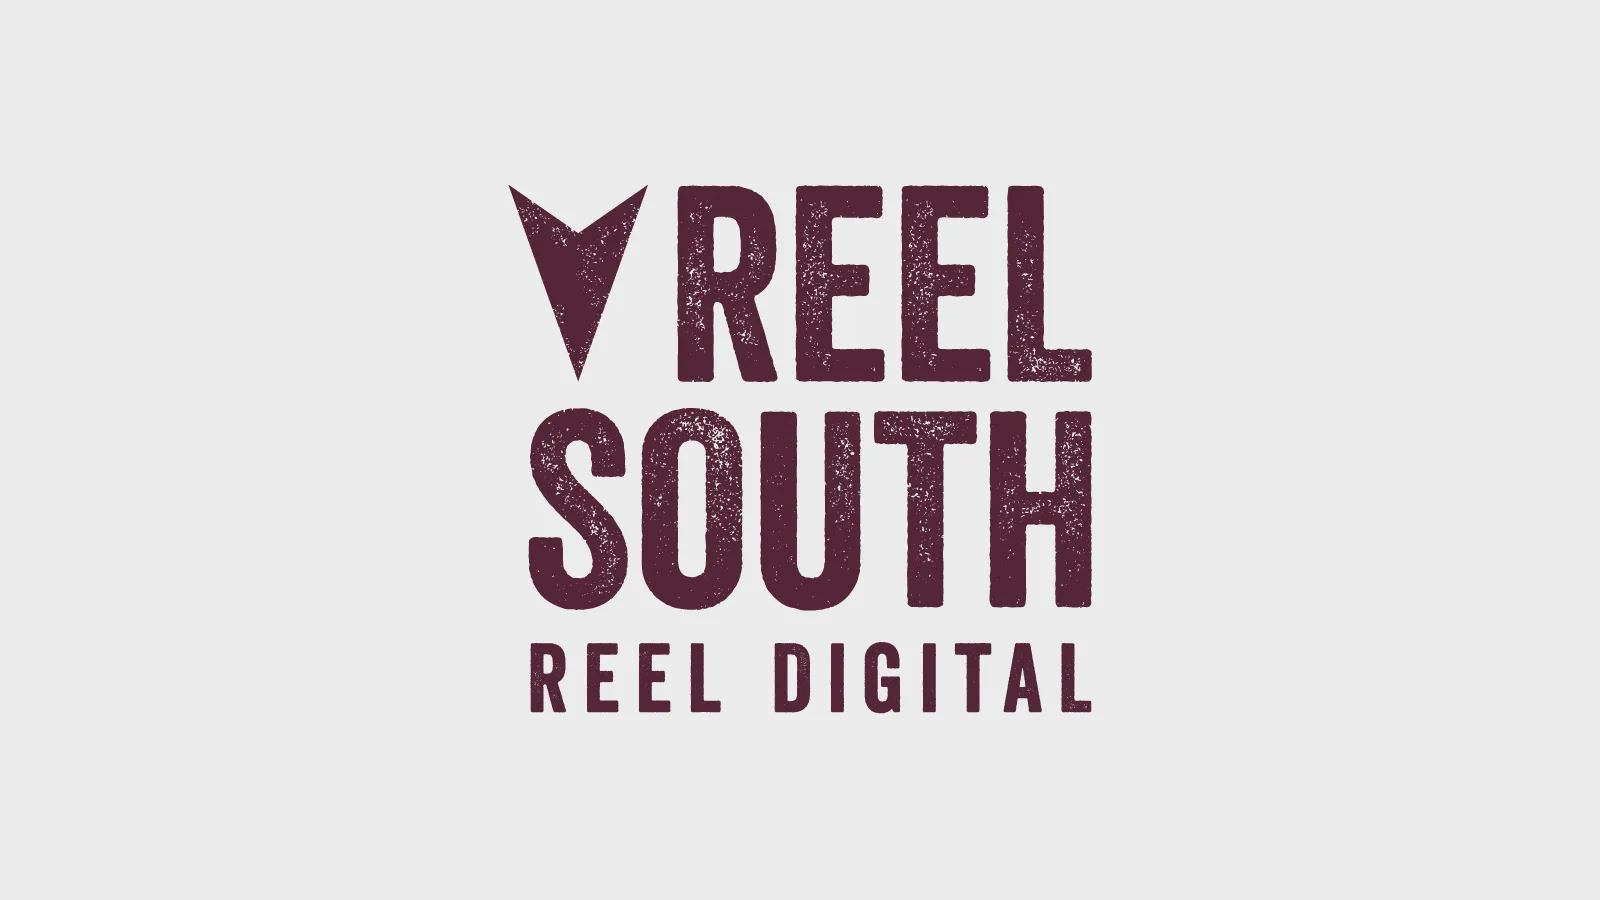 Reel South Reel Digital marron logo on white